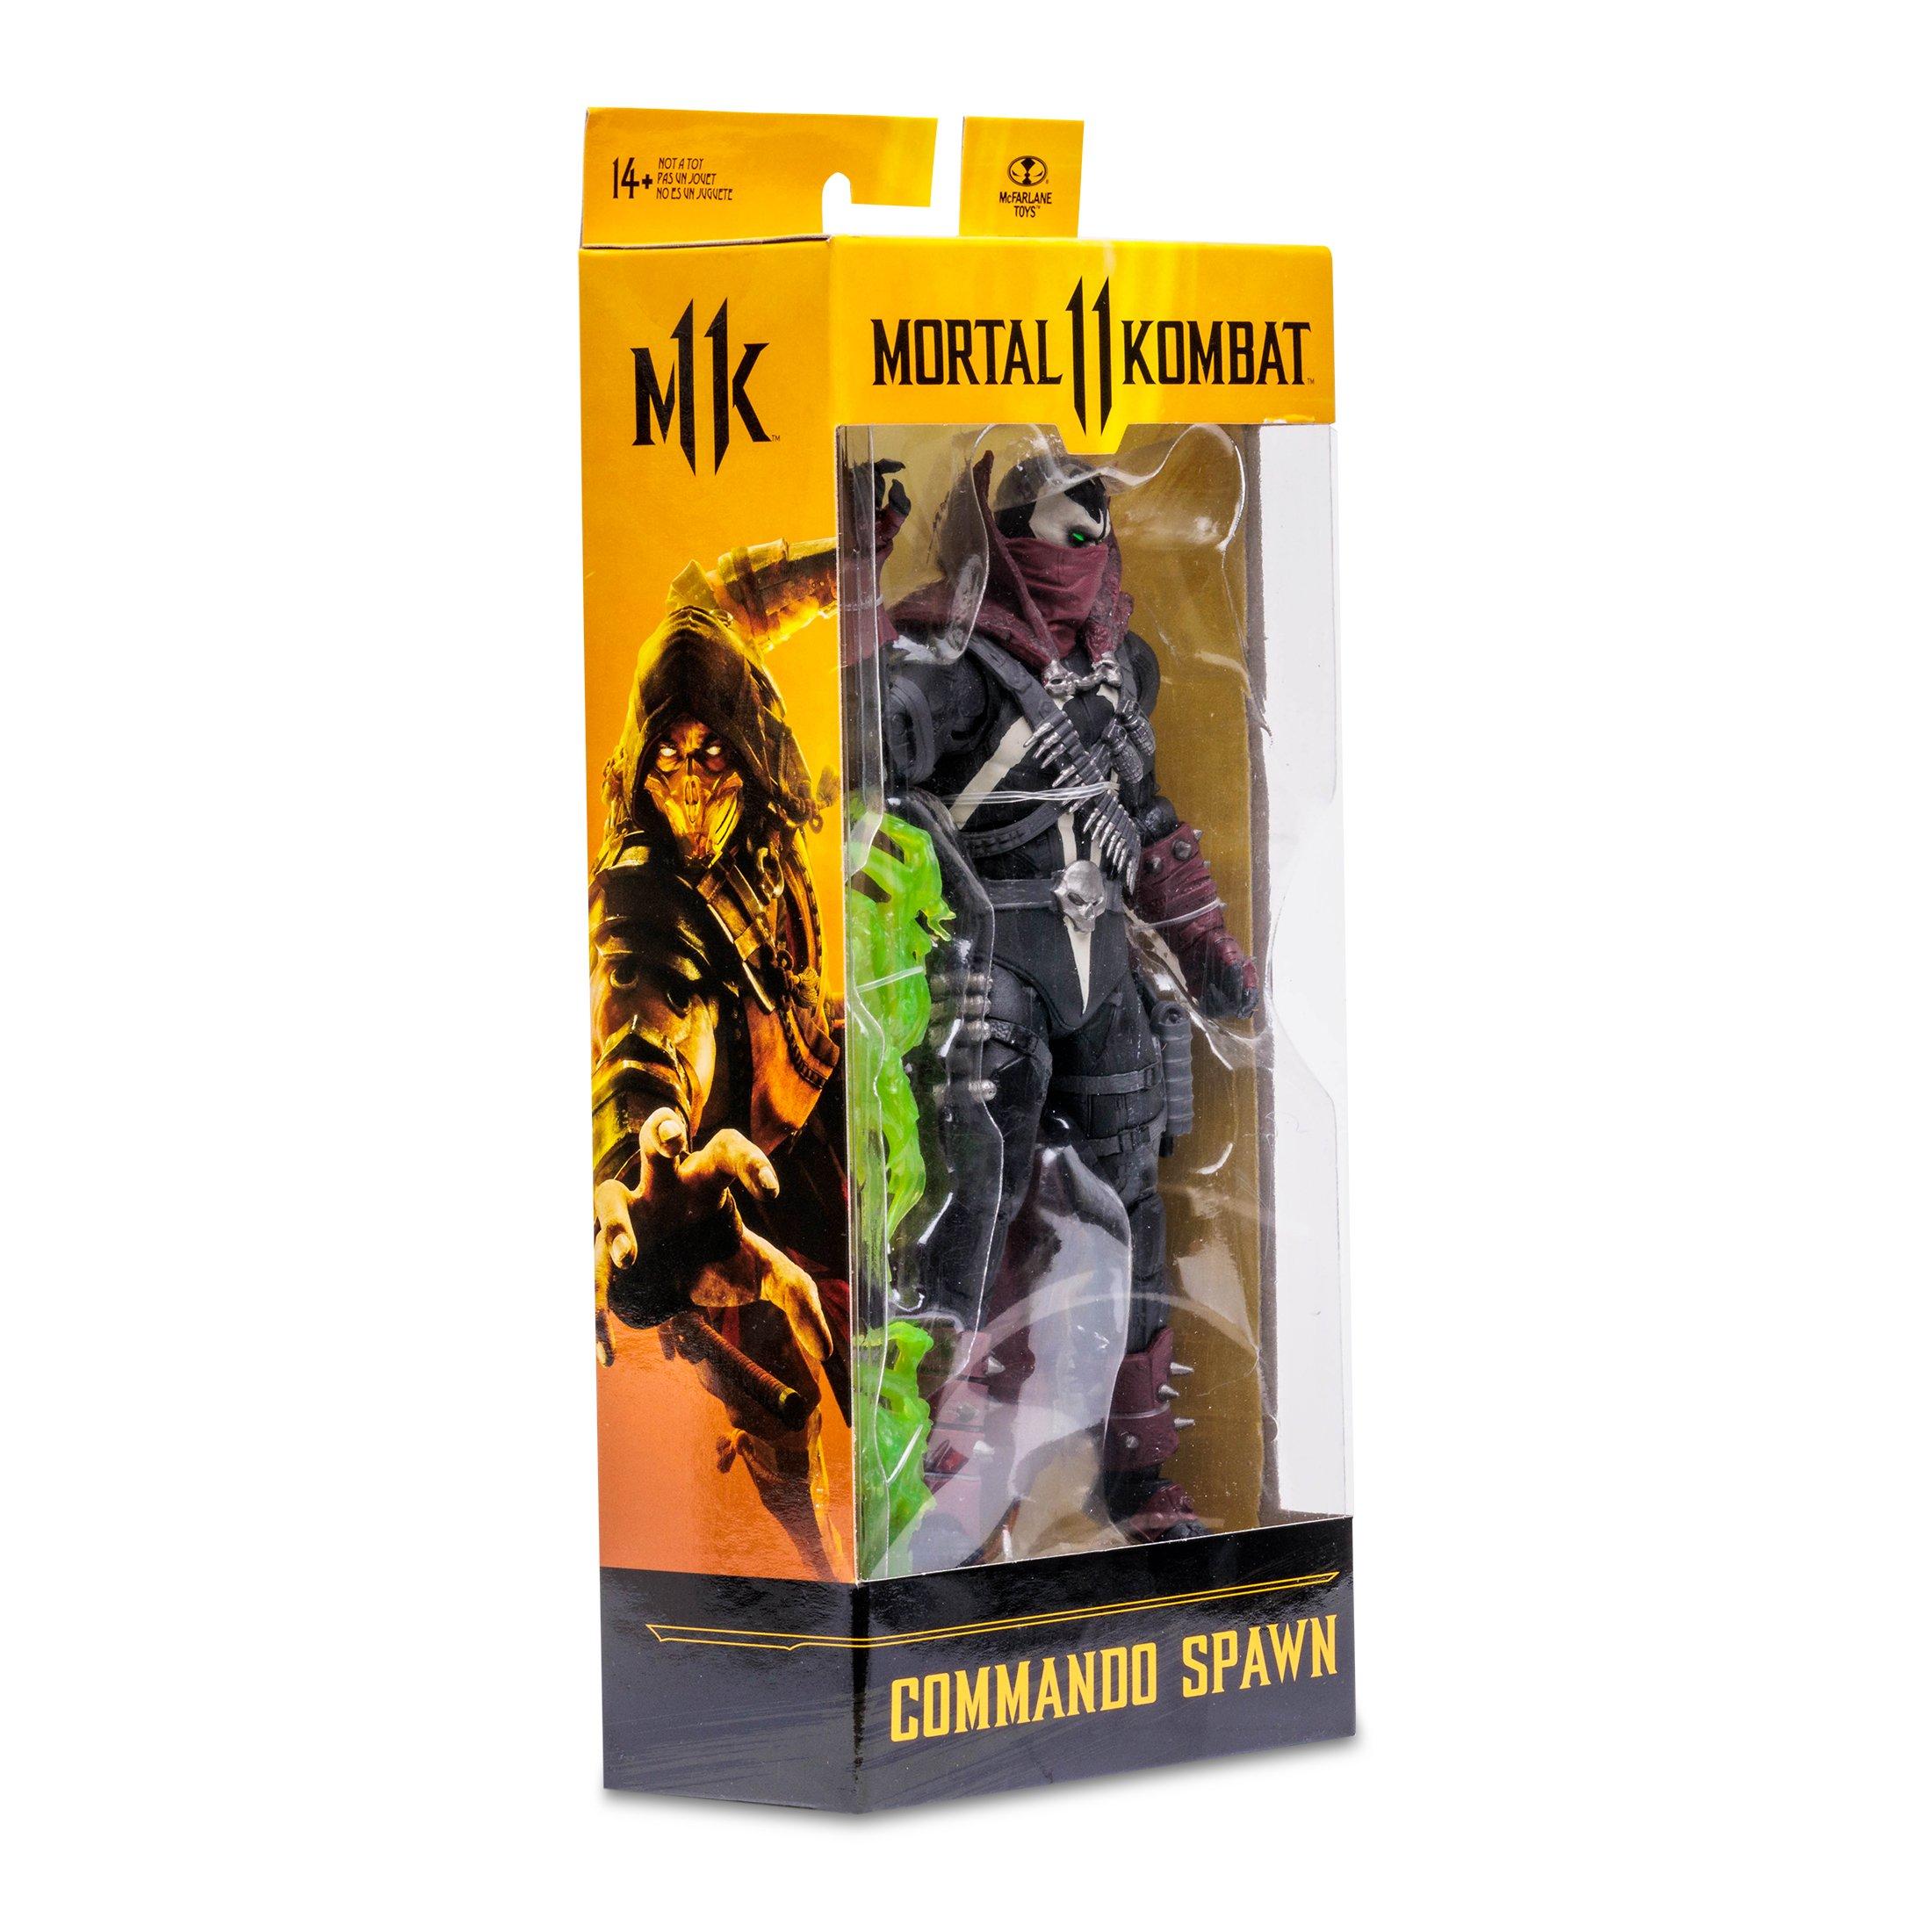 McFarlane Toys Mortal Kombat 11 Commando Spawn 7-in Action Figure